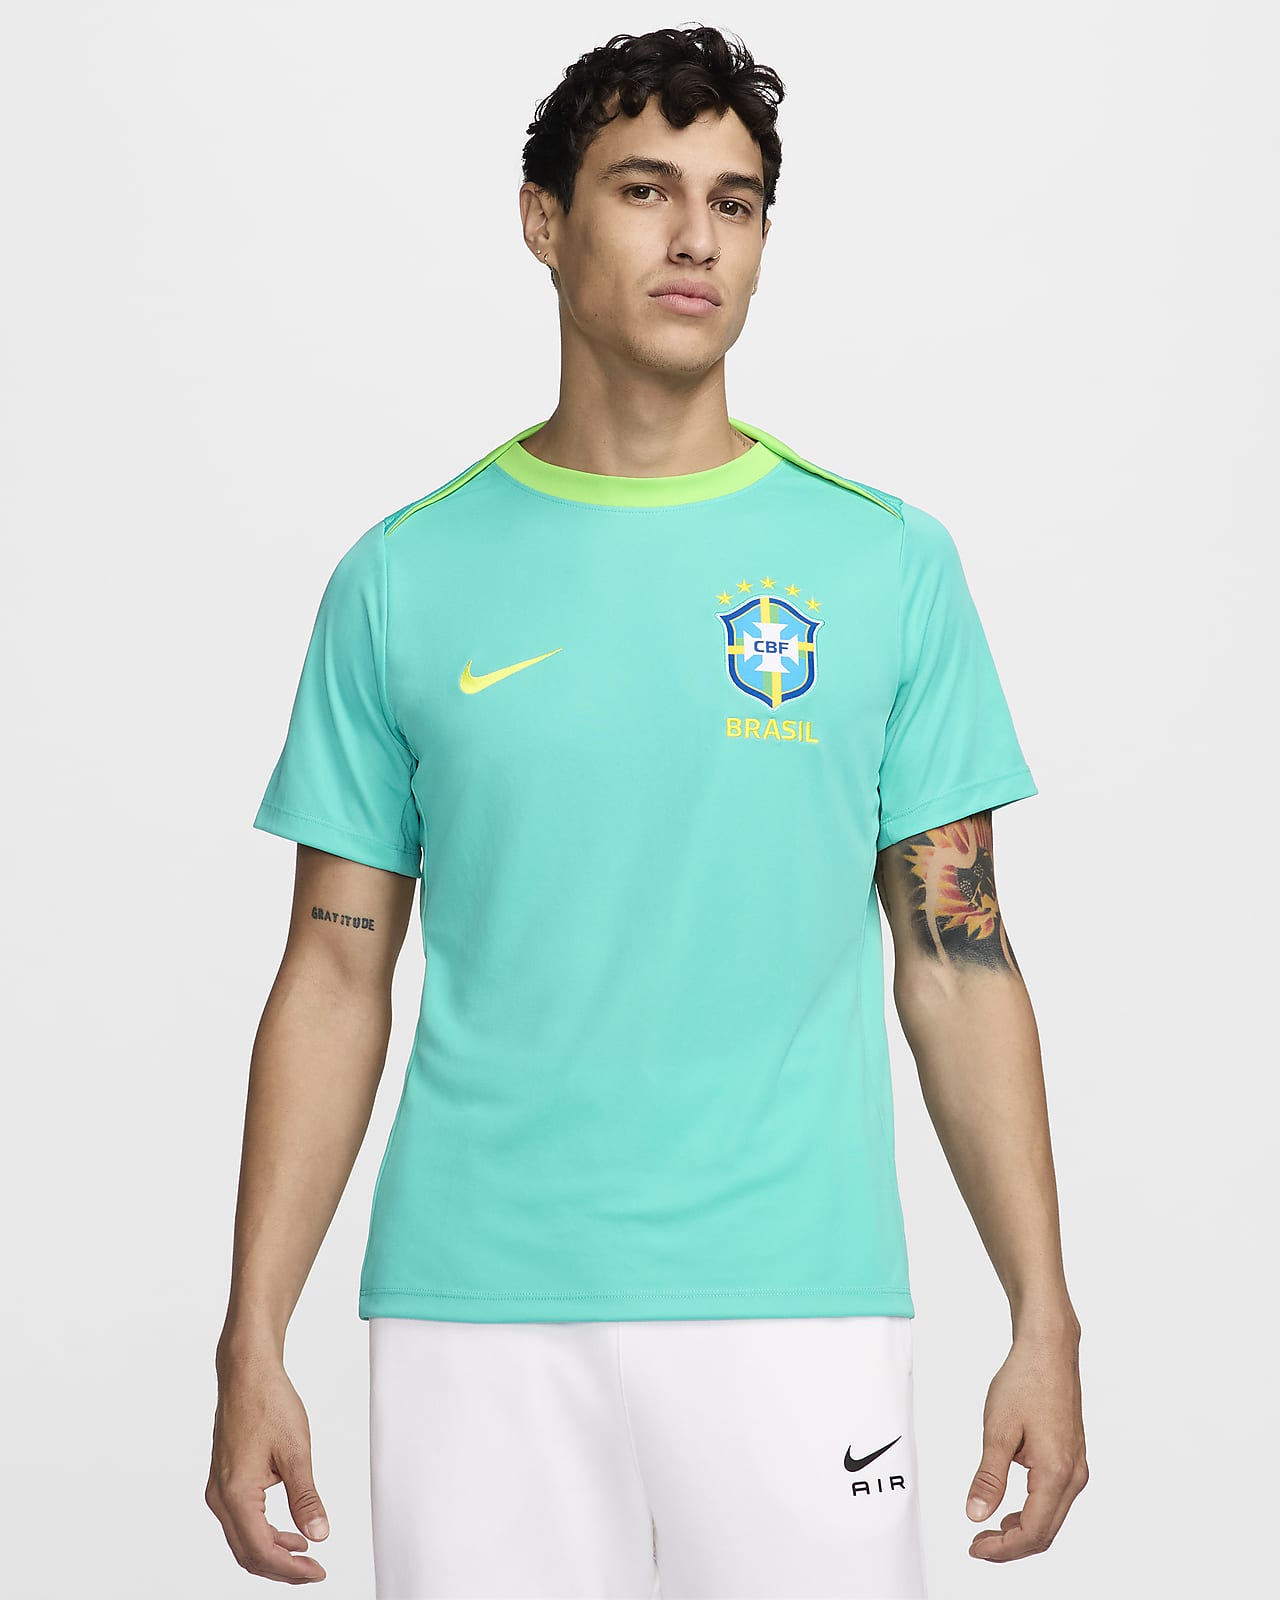 Brazil Academy Pro Men's Nike Dri-FIT Soccer Top